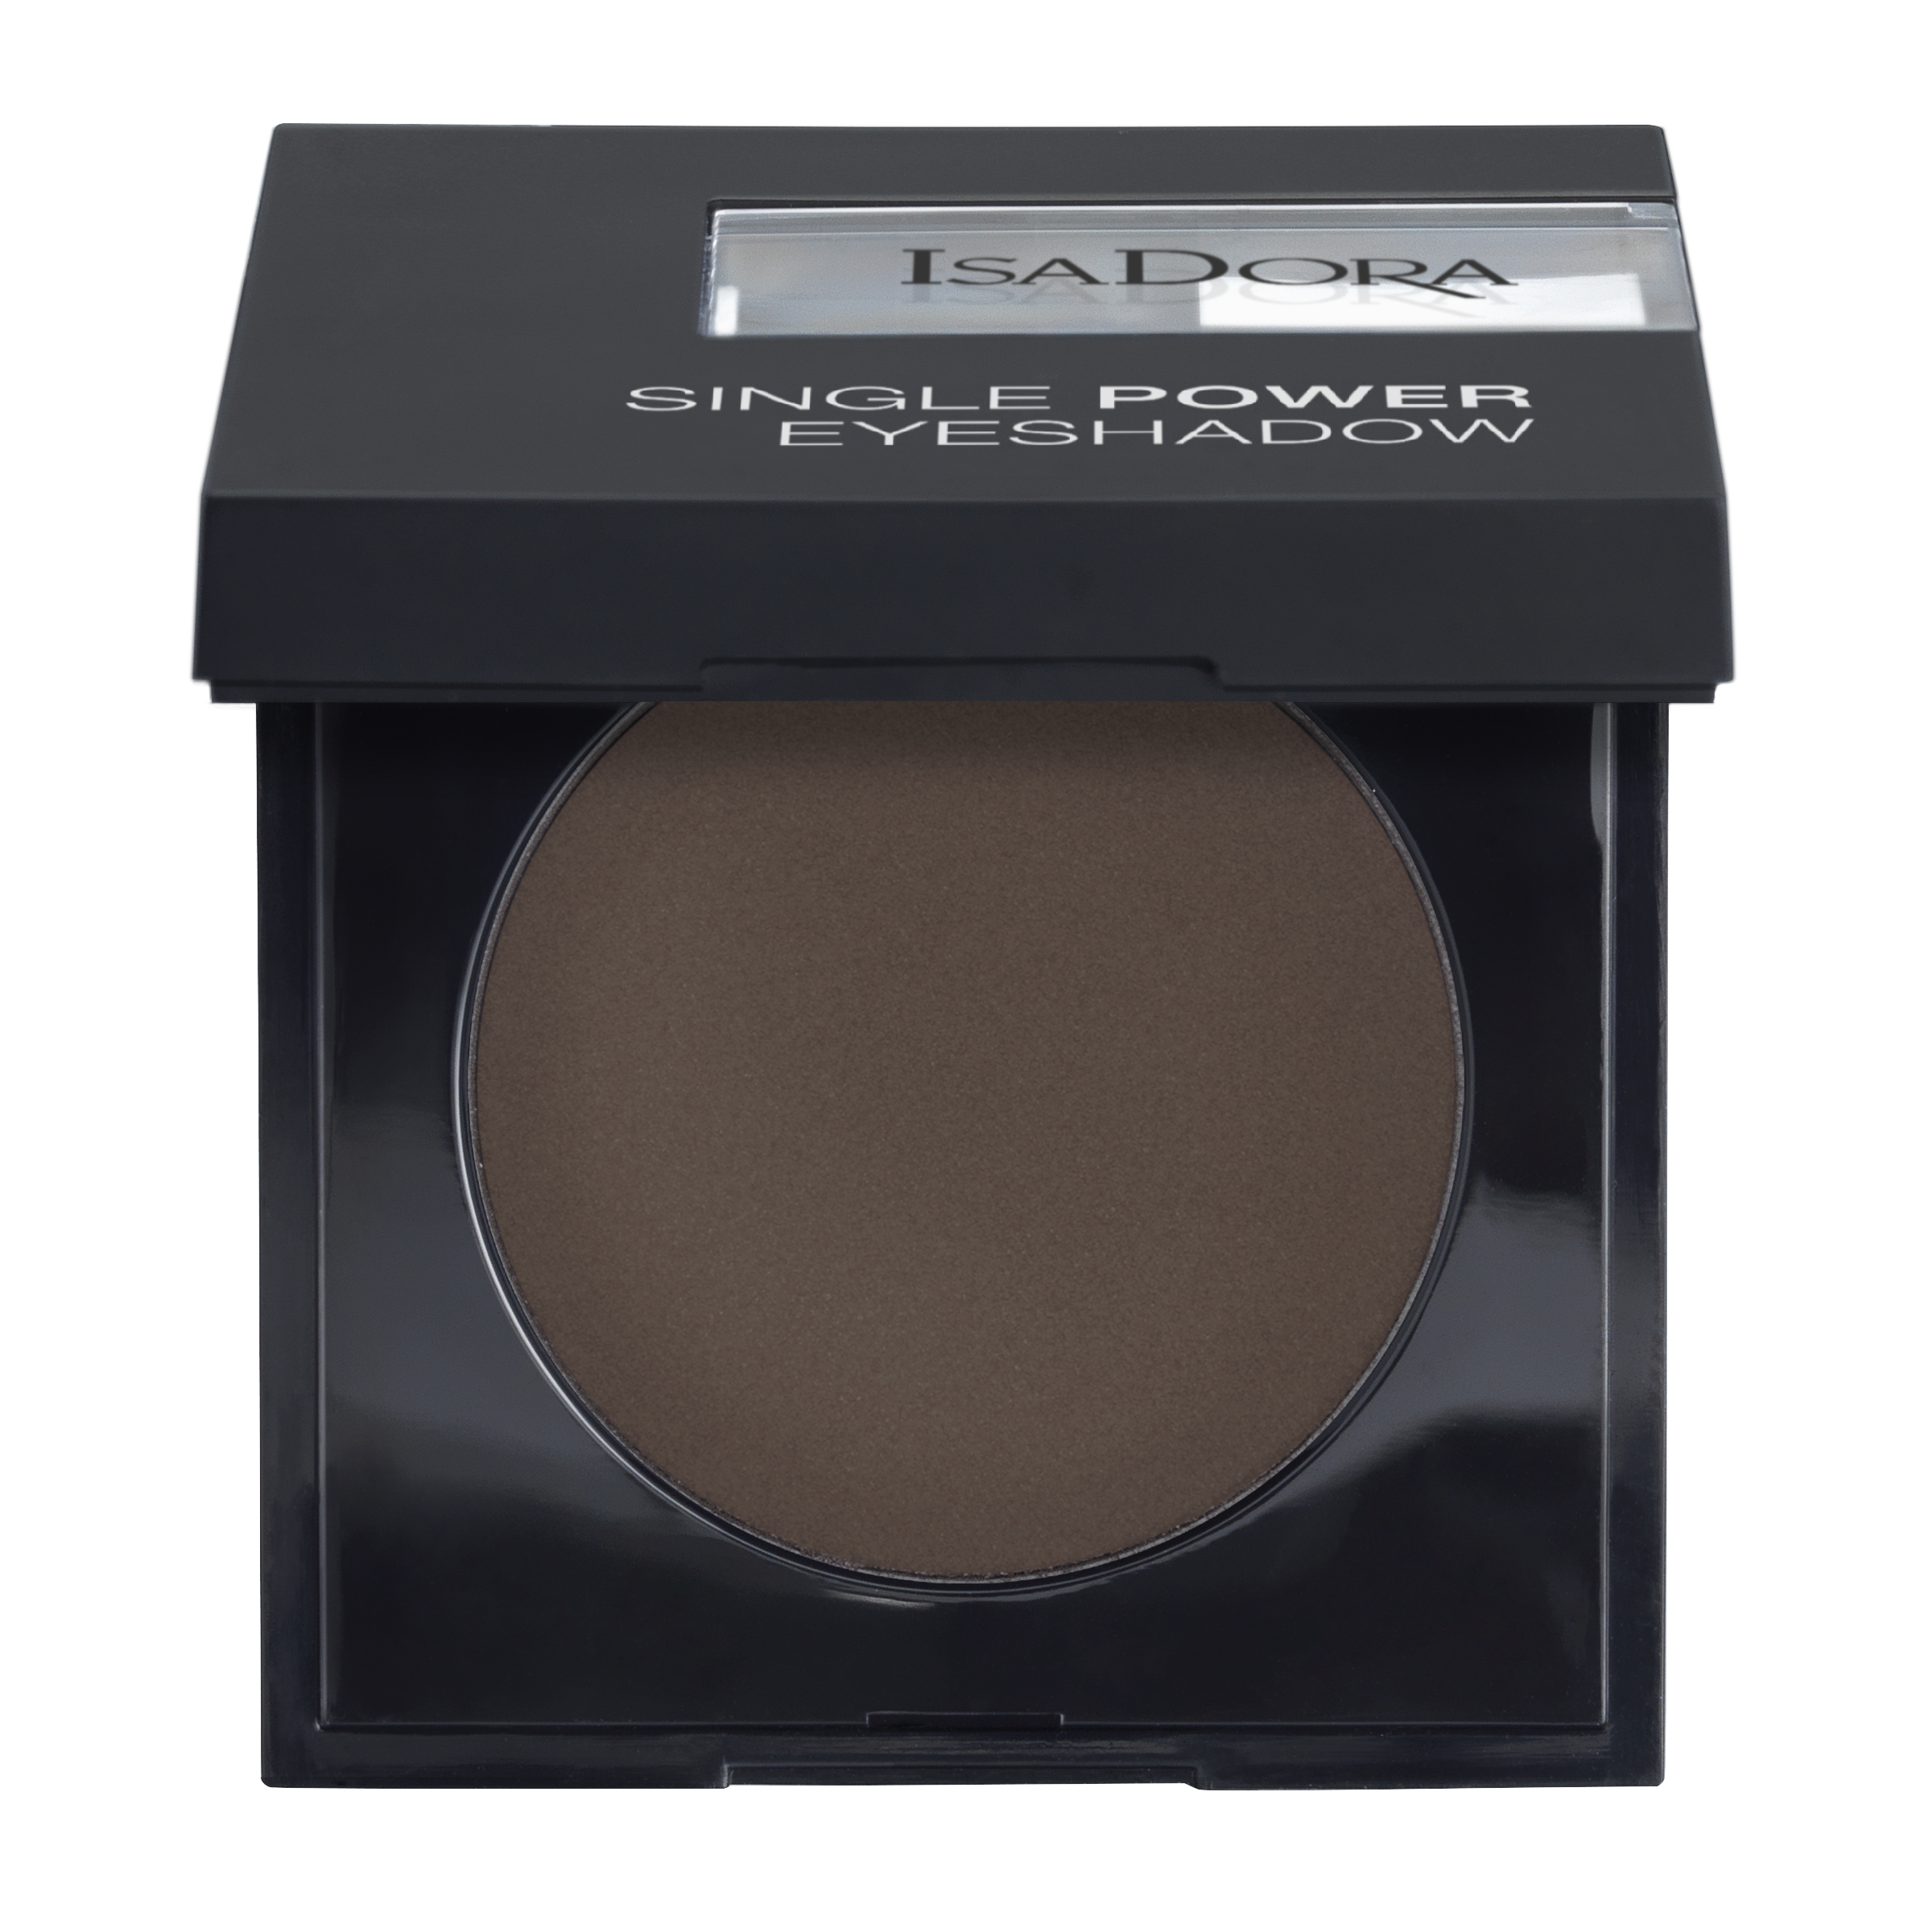 IsaDora Single Power Eyeshadow 17 Espresso Brown 2,2 g